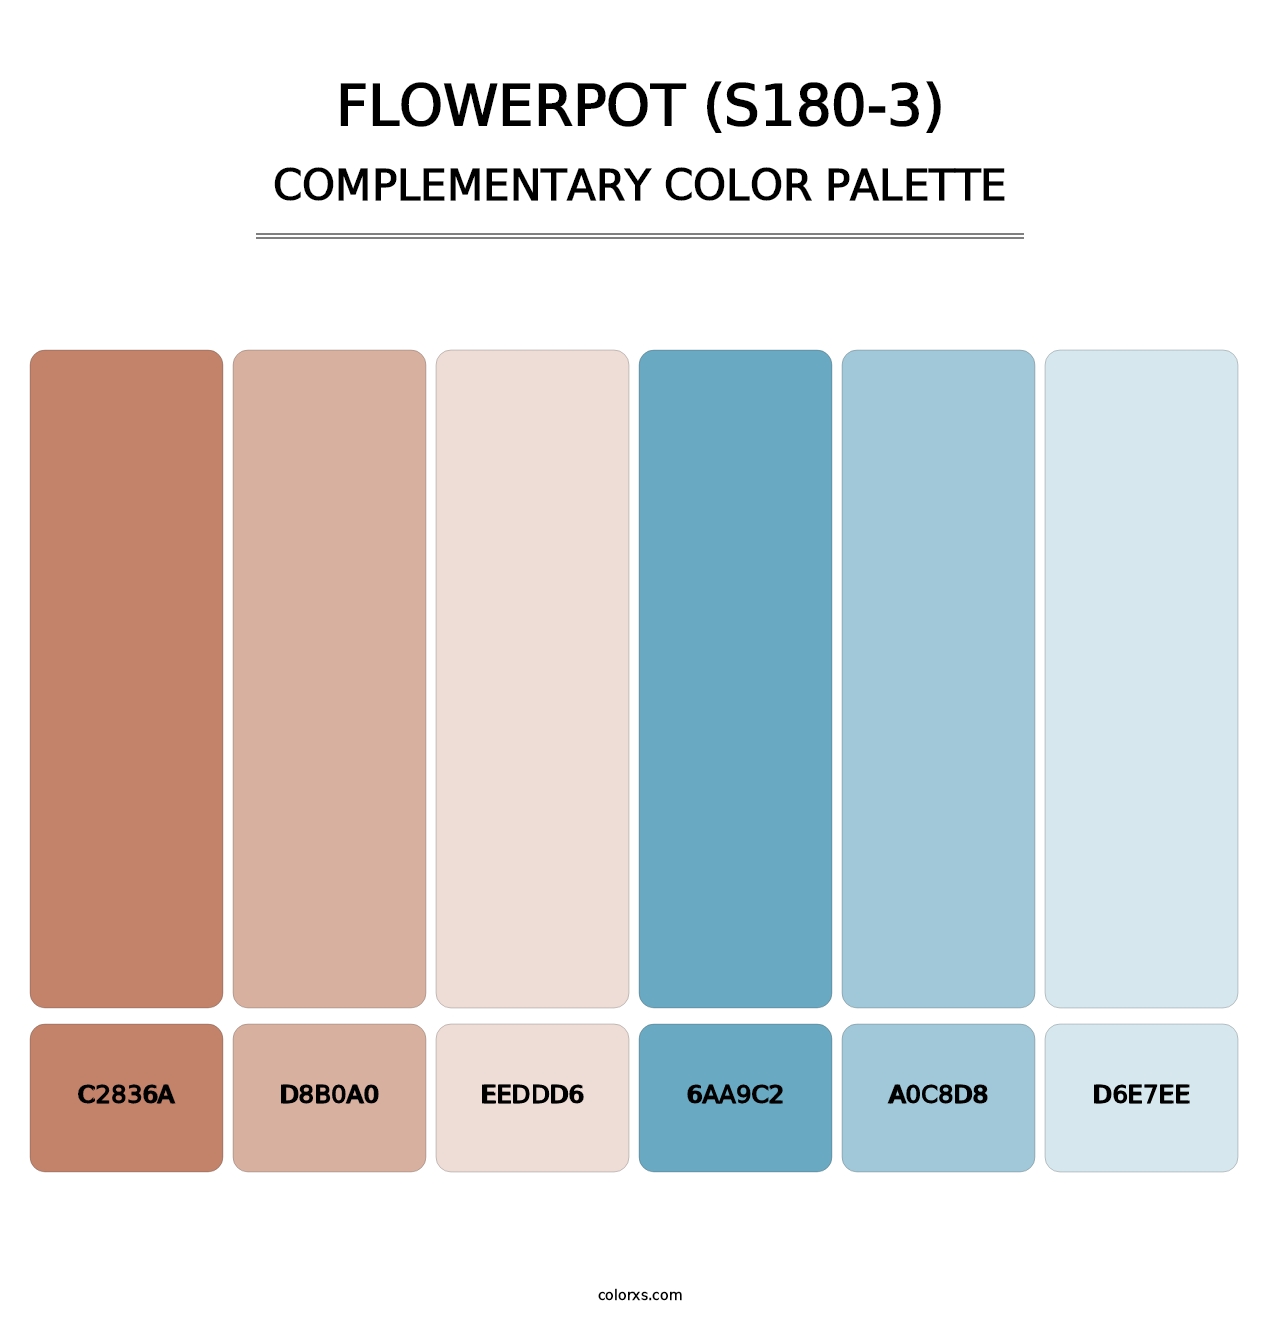 Flowerpot (S180-3) - Complementary Color Palette